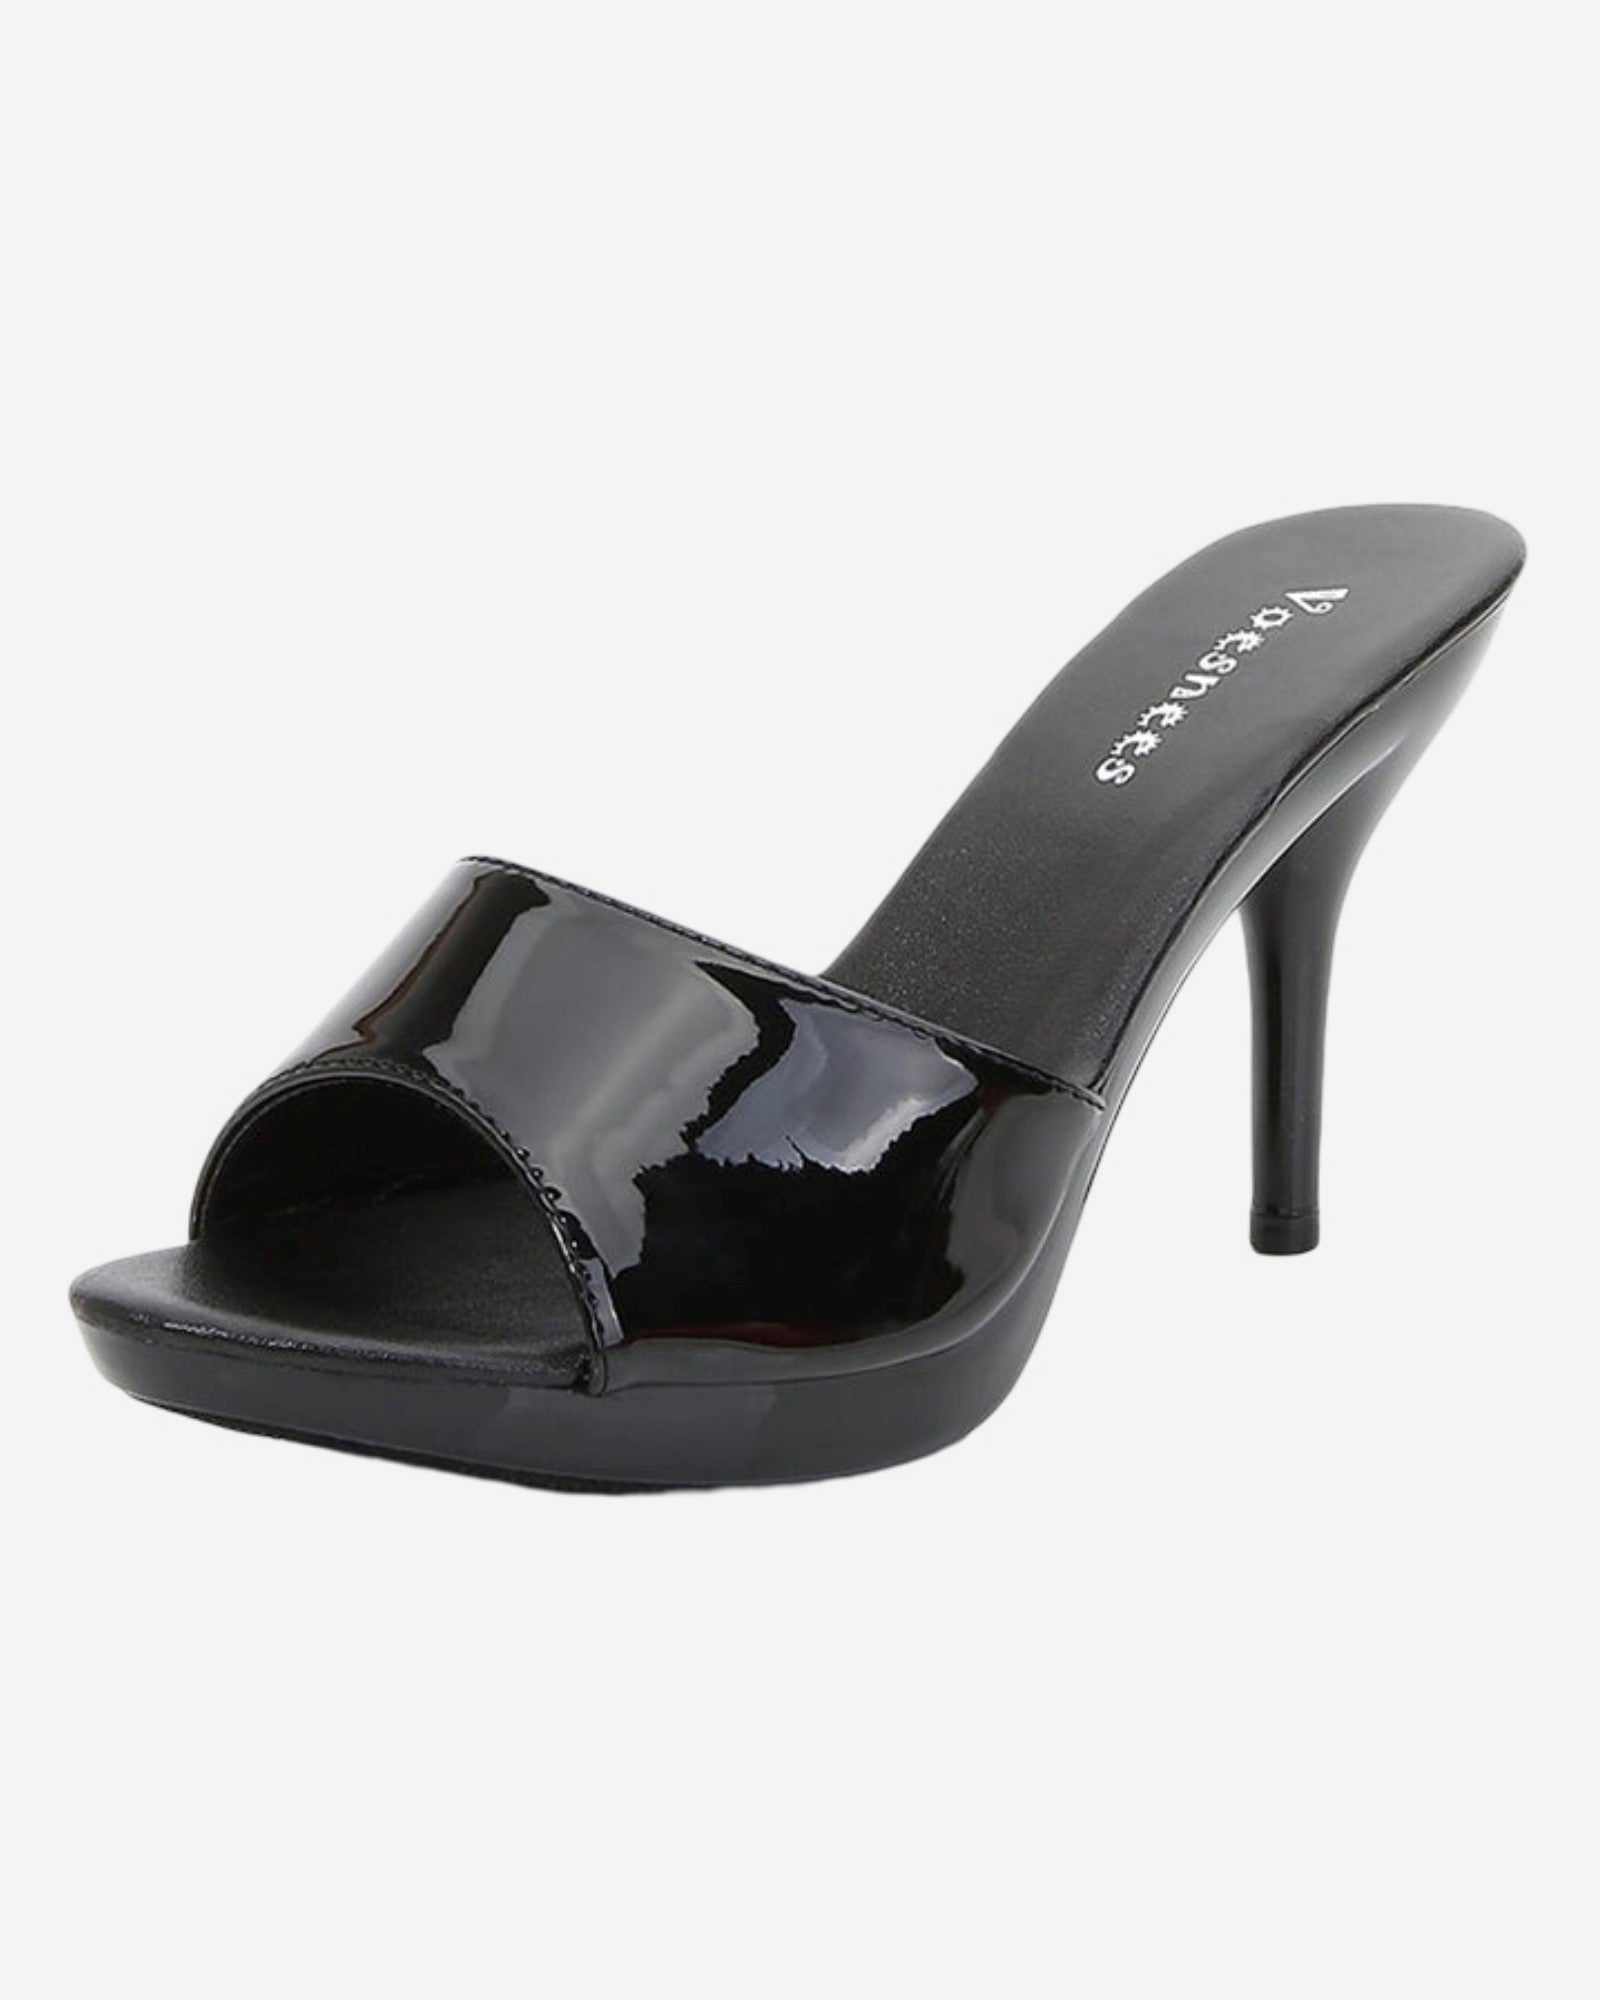 Shoes Black High Heels Slippers